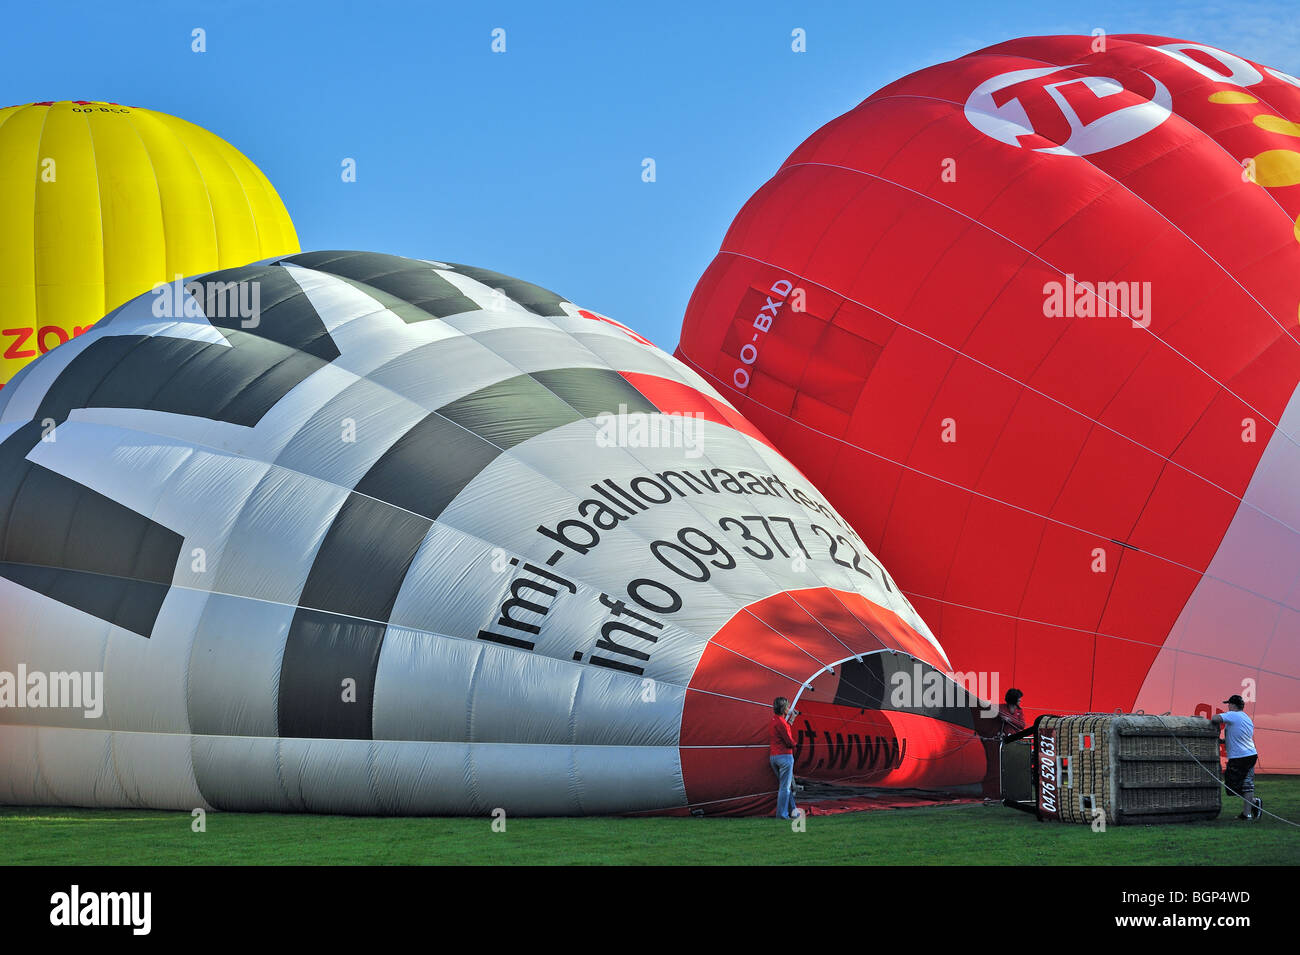 Balloonists / Aeronauts are preparing hot-air balloon during ballooning meeting Stock Photo